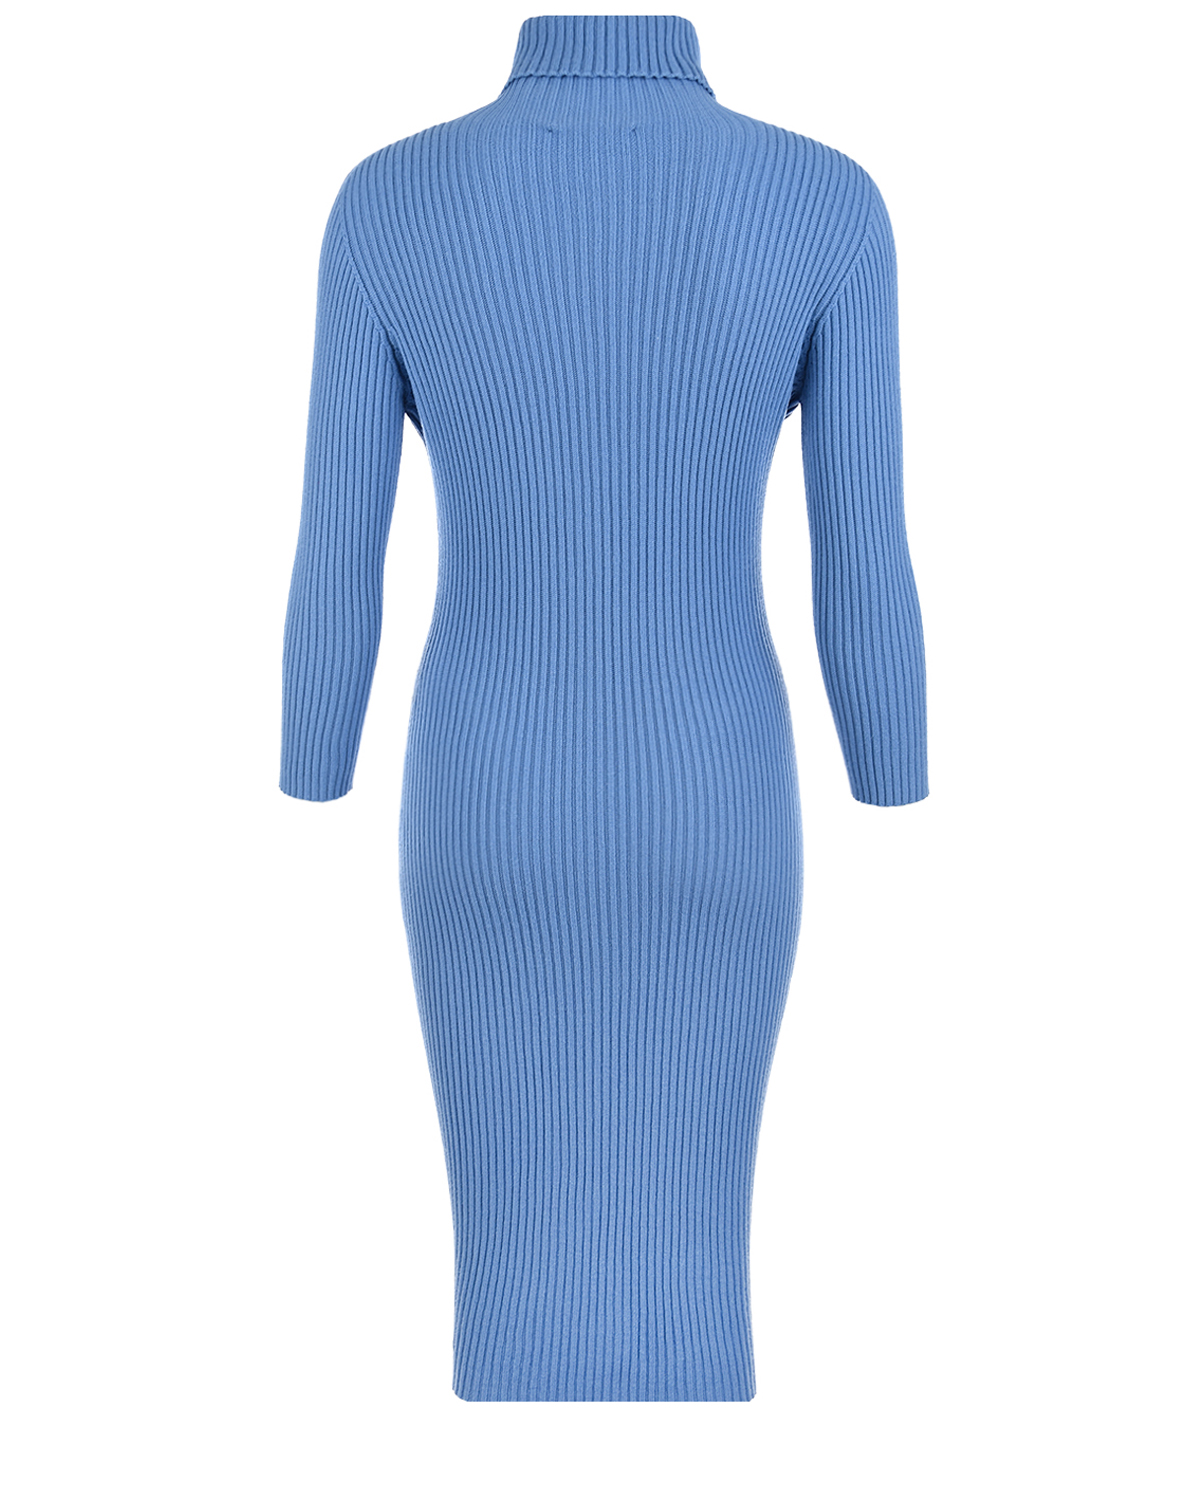 Голубое платье Livigno Pietro Brunelli, размер 42, цвет голубой - фото 6